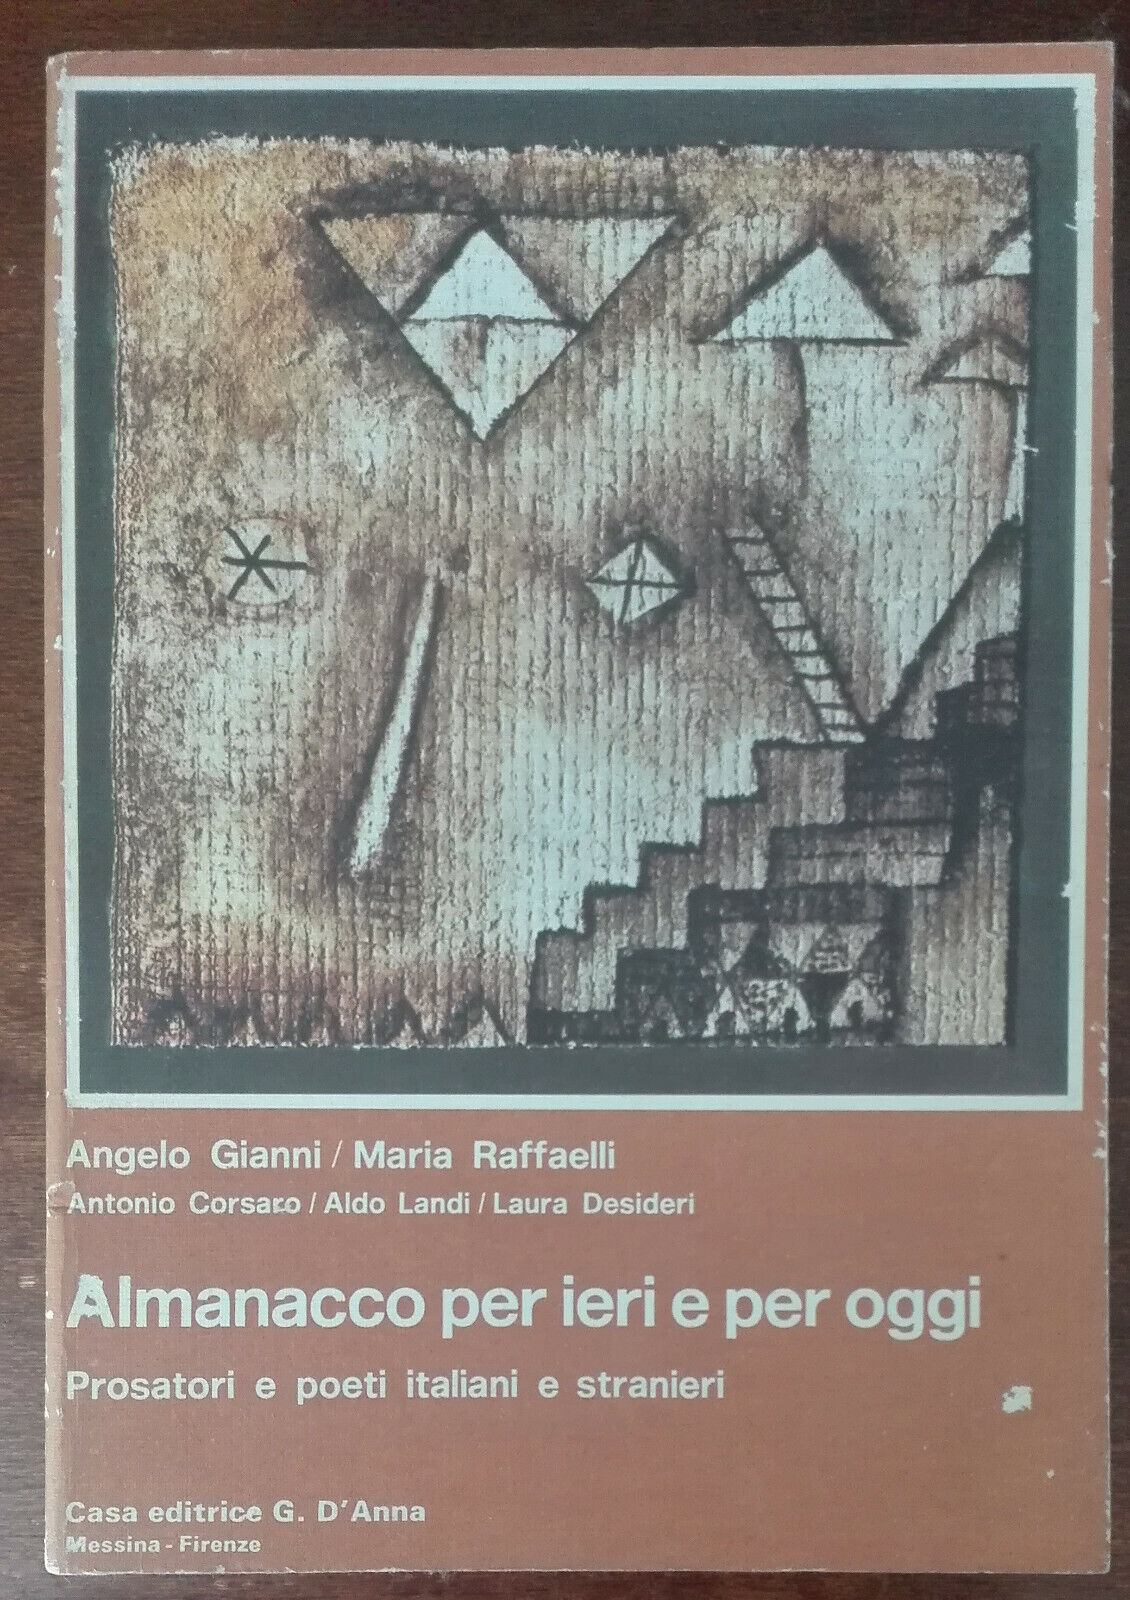 Almanacco per ieri e per oggi - Angelo Gianni, Maria Raffaelli - D'Anna,1980 - A